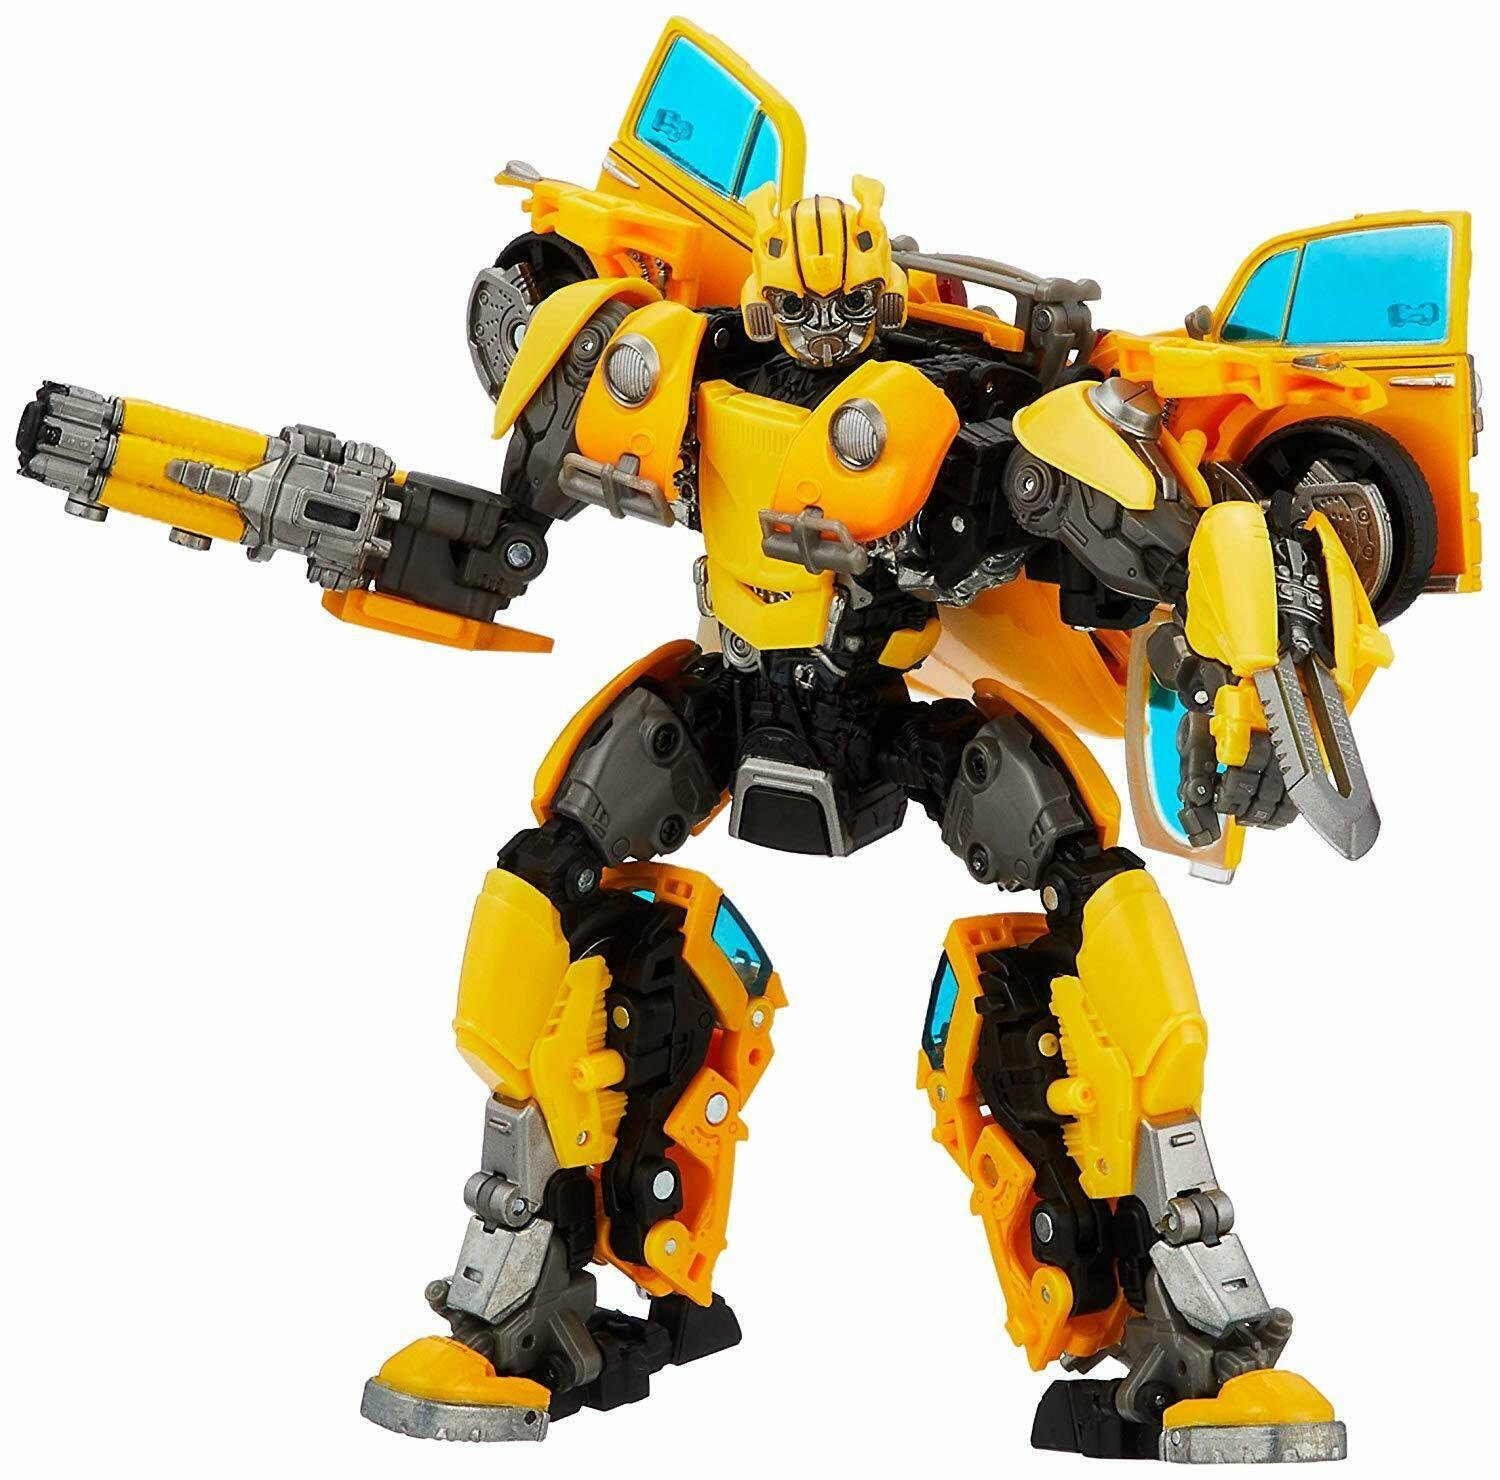 Transformers Bumblebee Roboter Flim Figur Auto Actionsfigur Spielzeug Filmreihe 